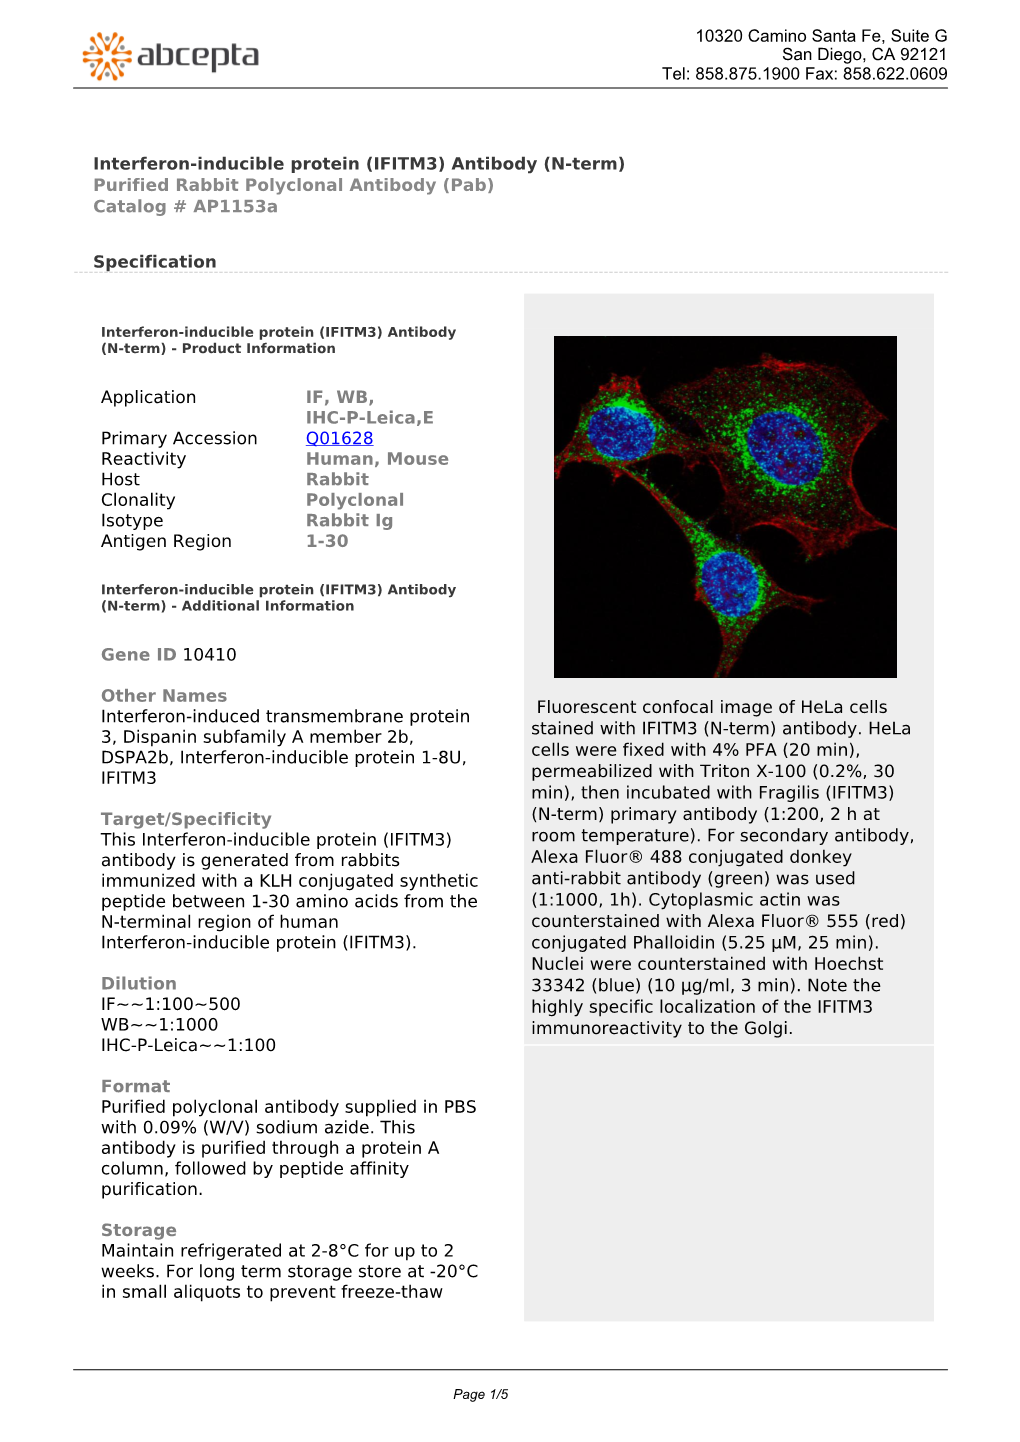 Interferon-Inducible Protein (IFITM3) Antibody (N-Term) Purified Rabbit Polyclonal Antibody (Pab) Catalog # Ap1153a